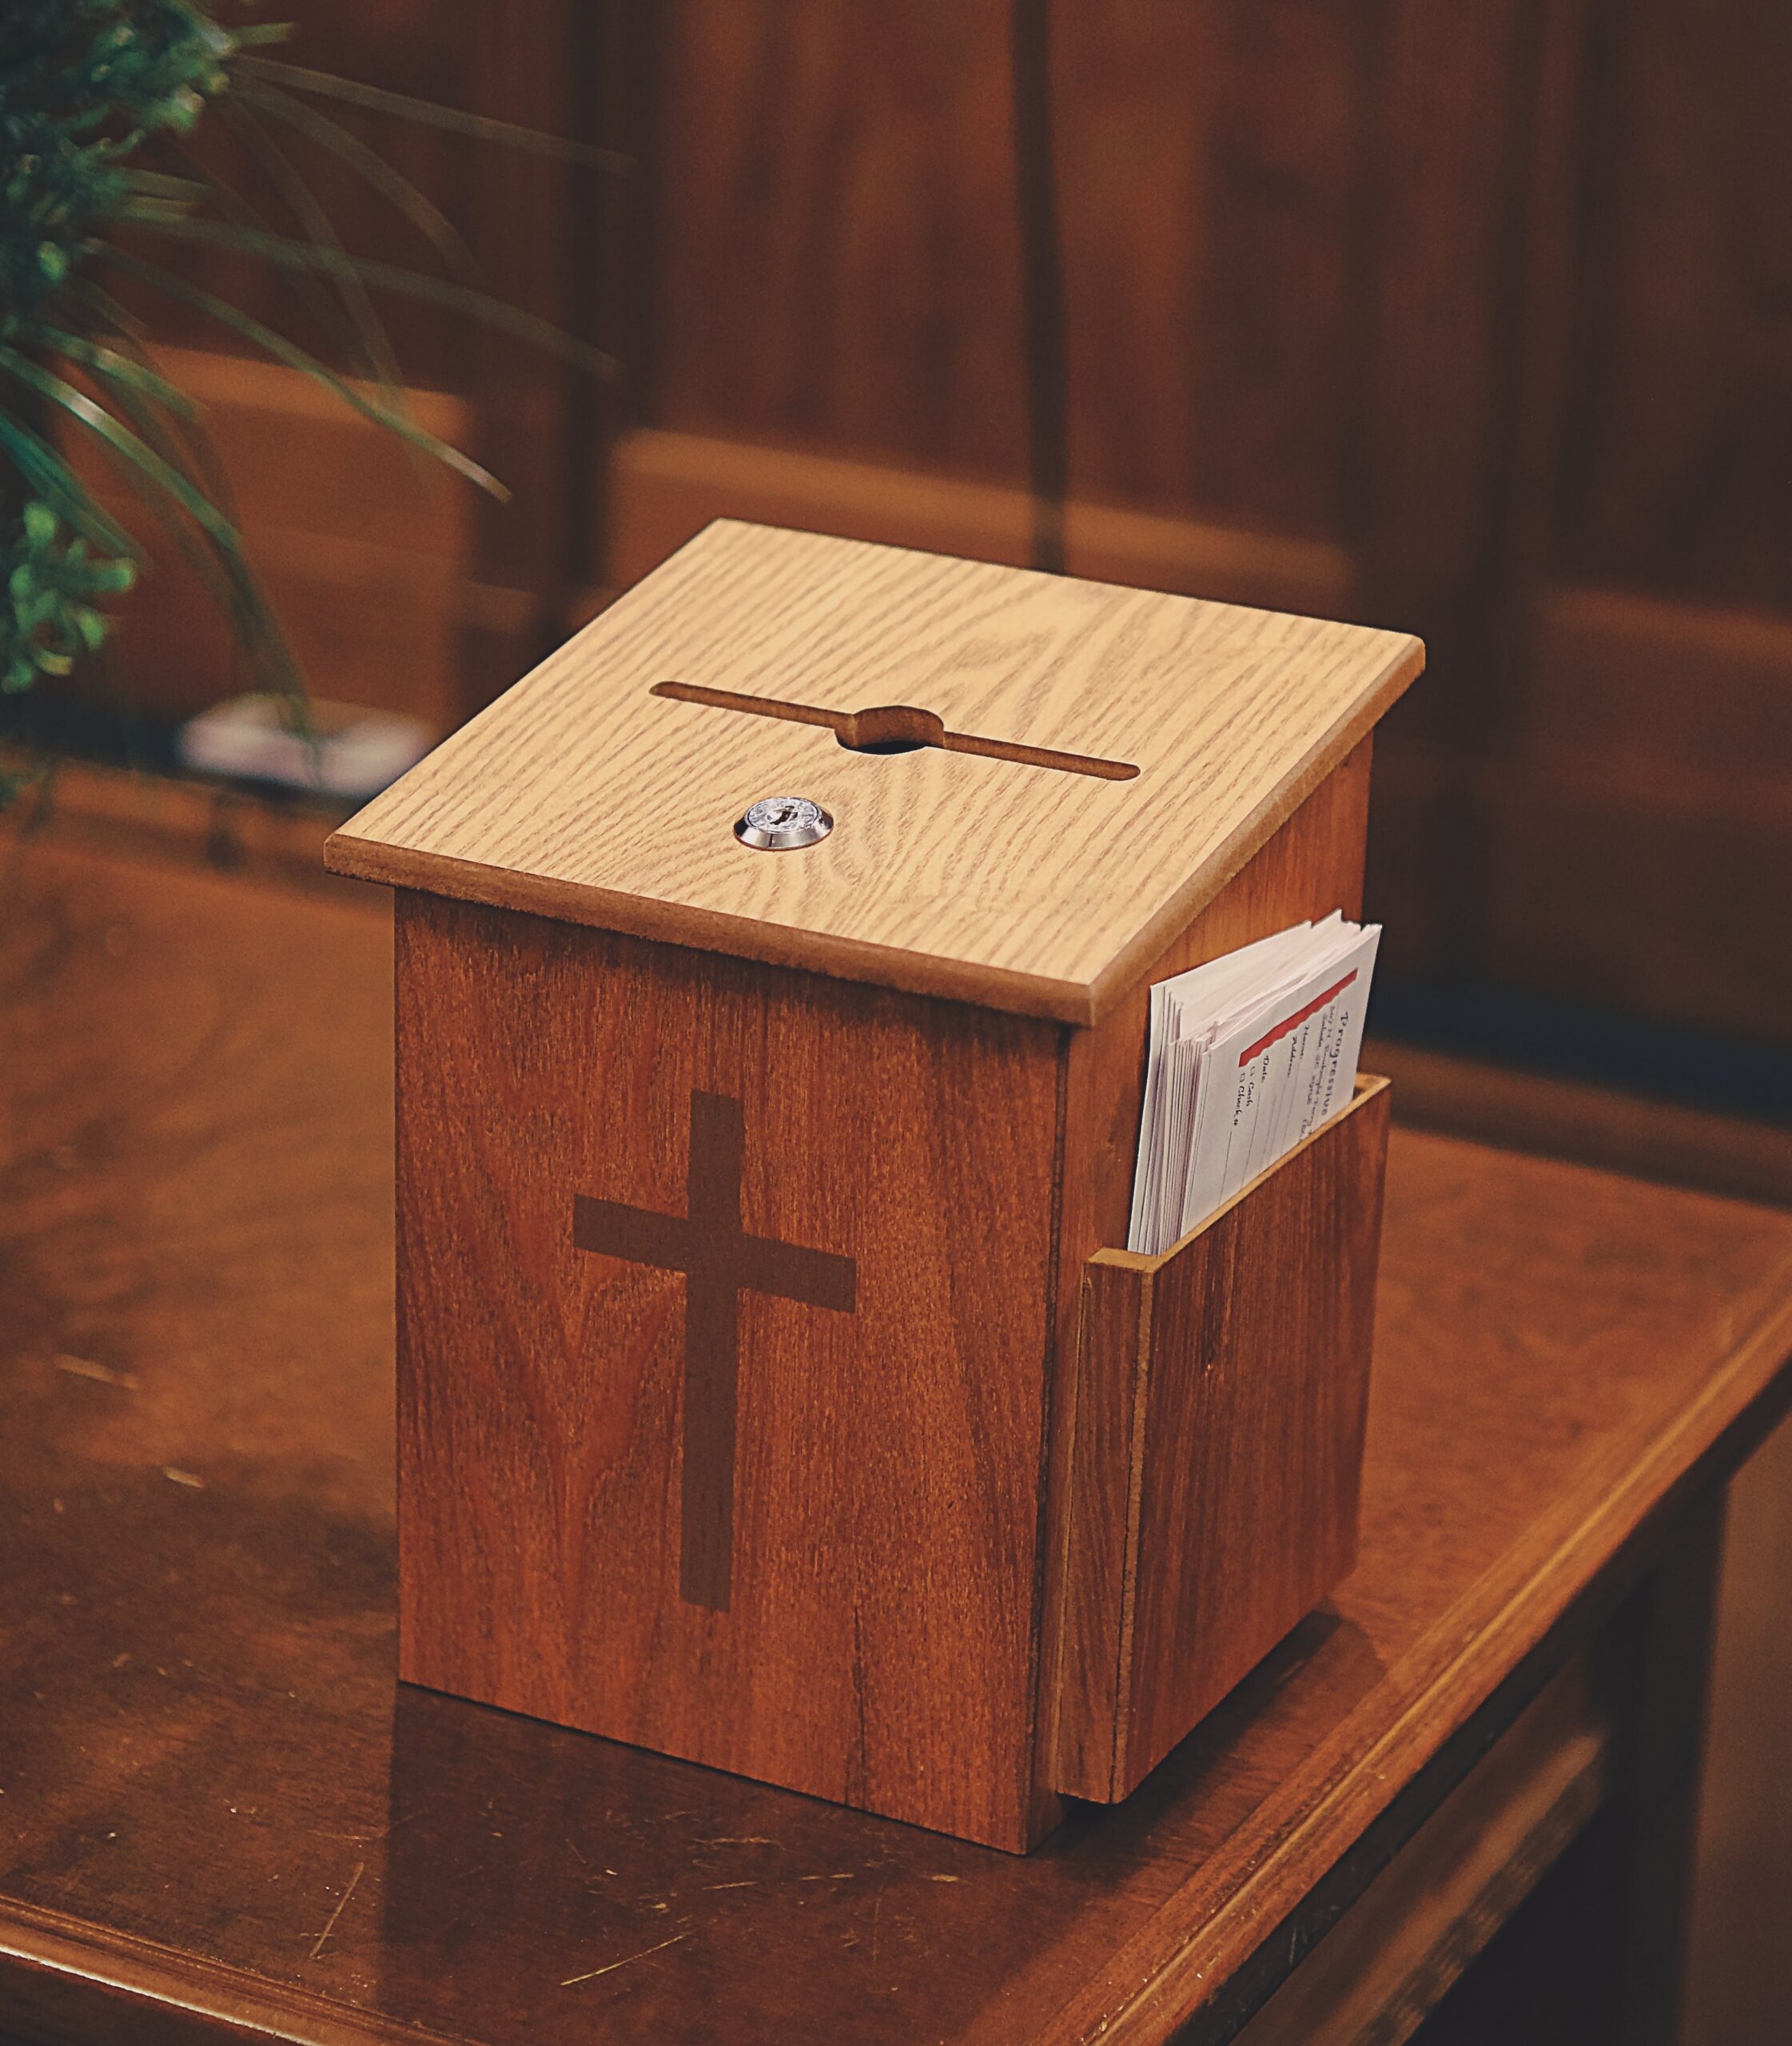 church donation box with envelopes